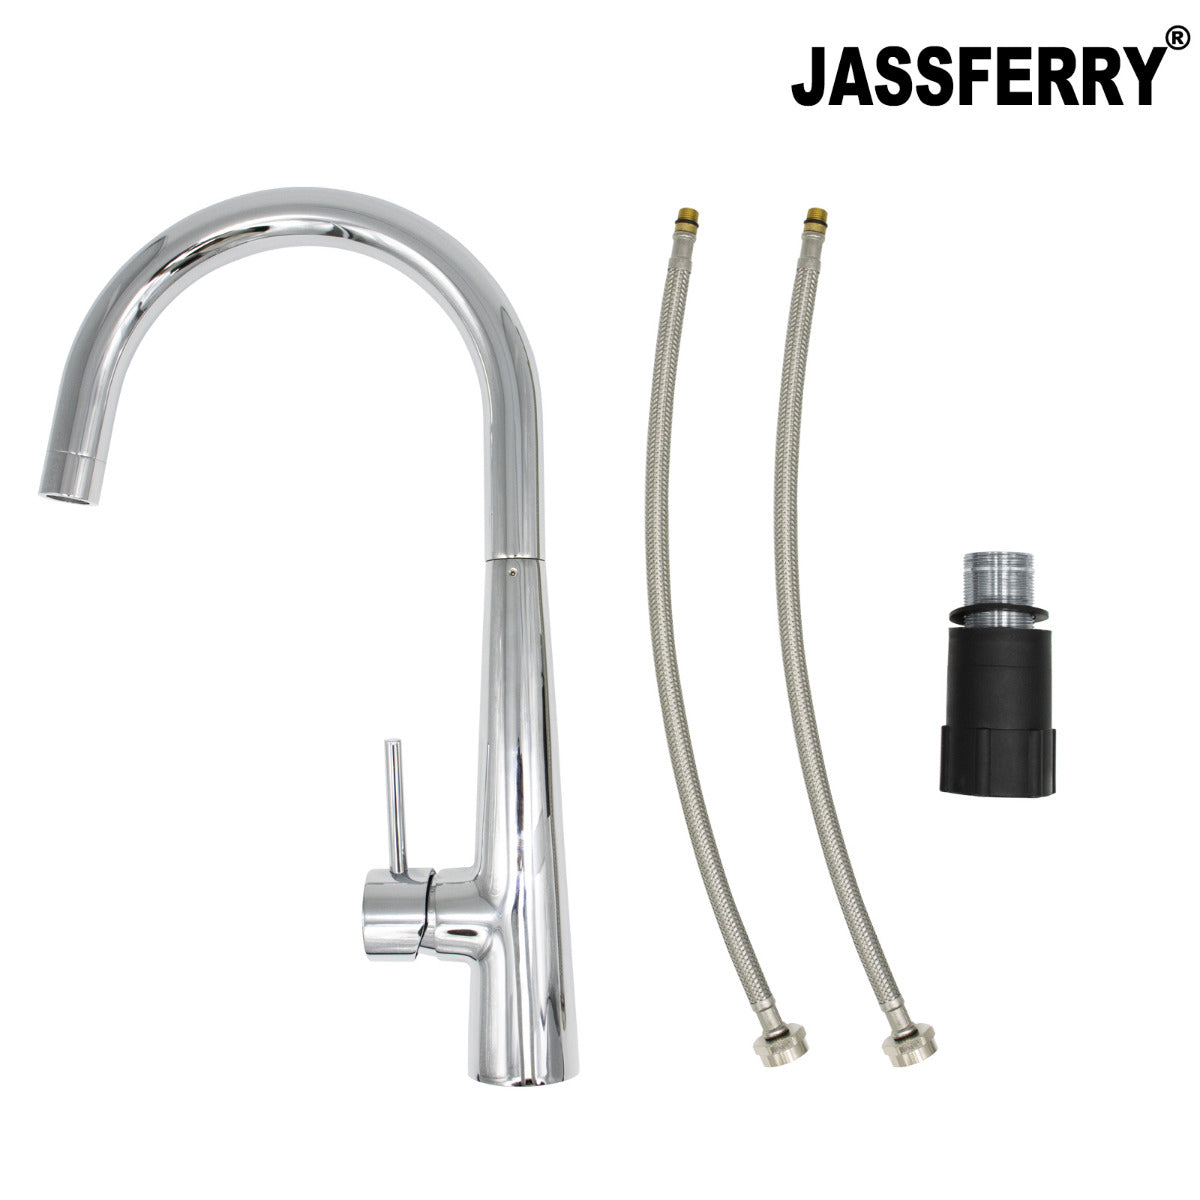 JassferryJASSFERRY Modern Kitchen Sink Mixer Tap with 360 Degree Swivel Spout ChromeKitchen taps